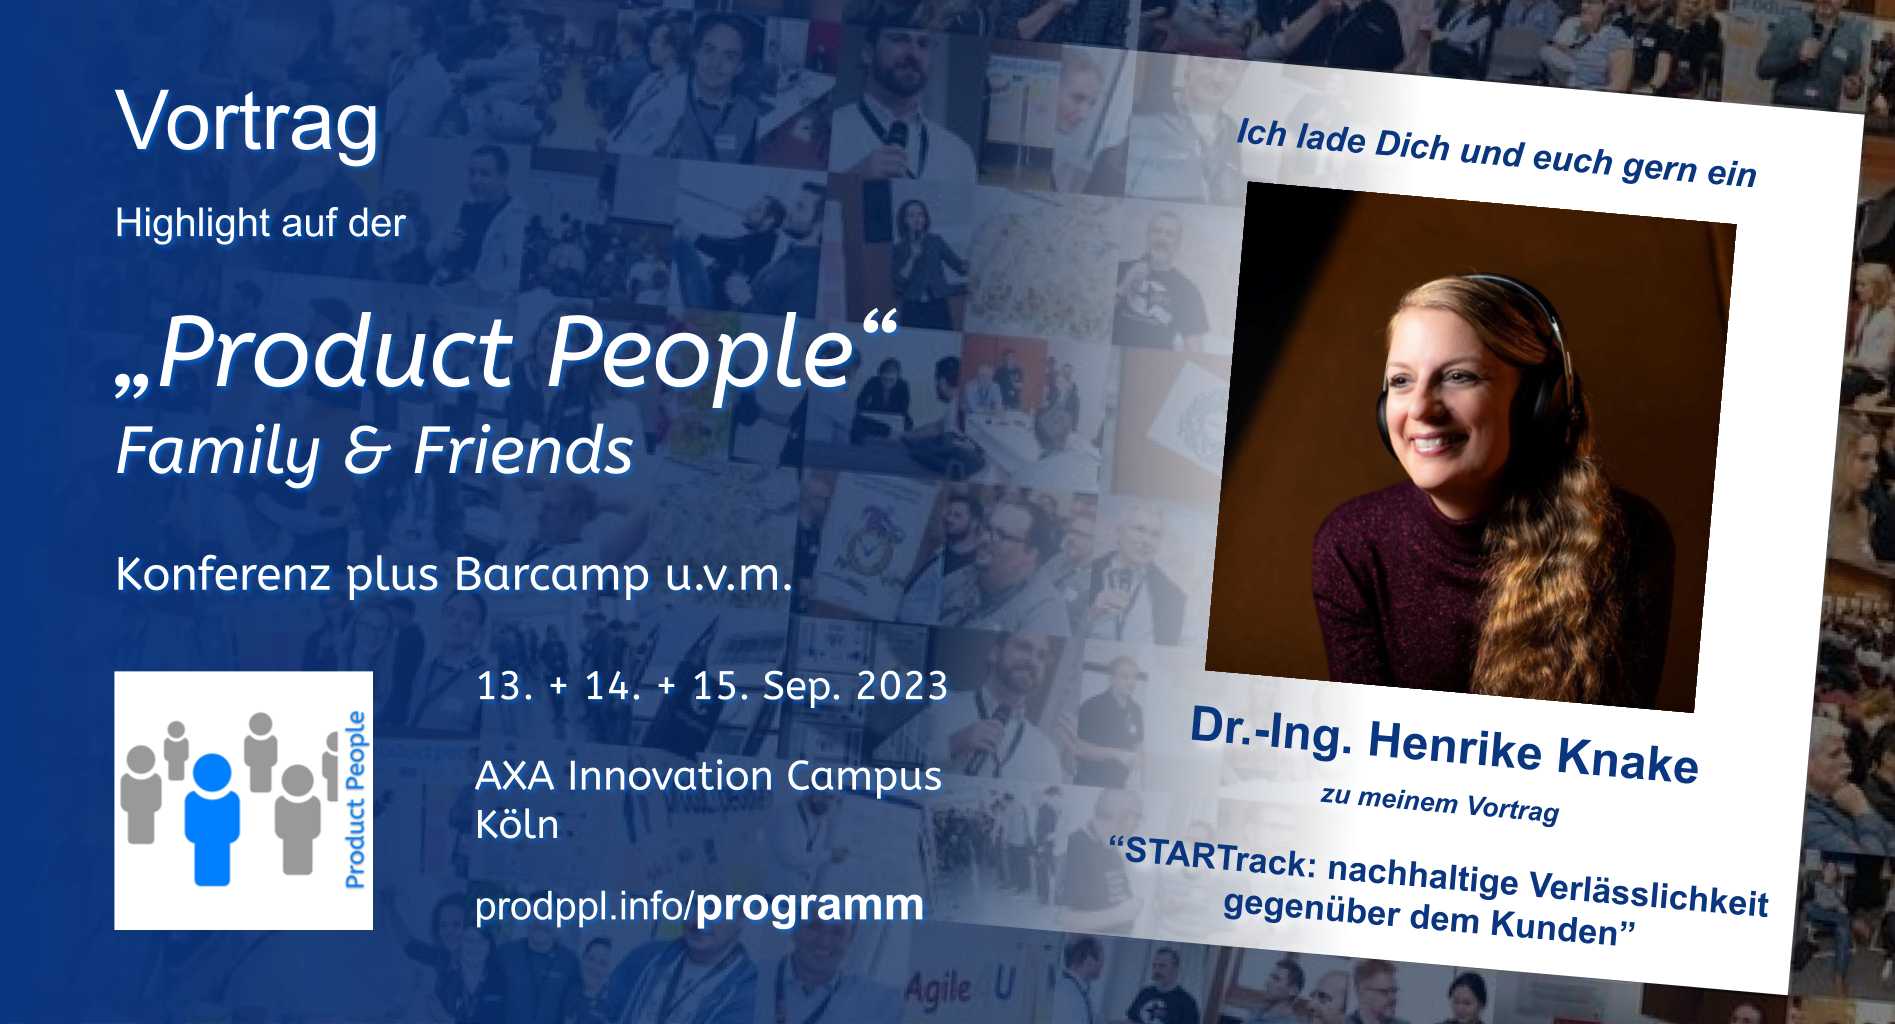 Vortrag - "STARTrack: nachhaltige Verlässlichkeit gegenüber dem Kunden" -  Dr.-Ing. Henrike Knake - "Product People - Family & Friends" - Konferenz plus Barcamp - Köln 2023